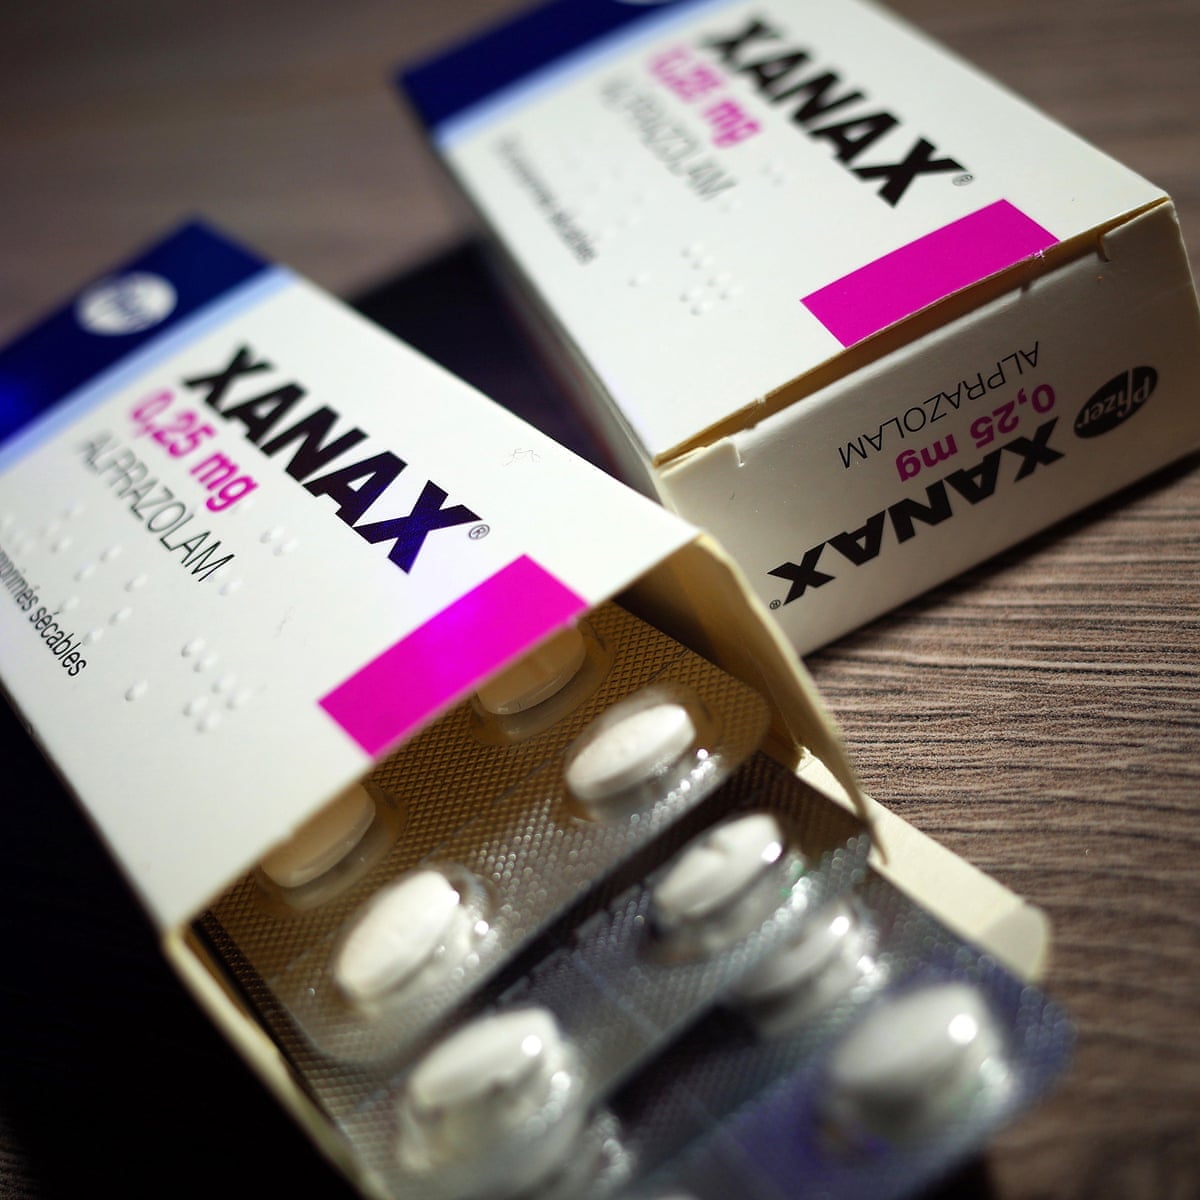 Anxious teenagers 'buy Xanax on the dark web' | Drugs | The Guardian